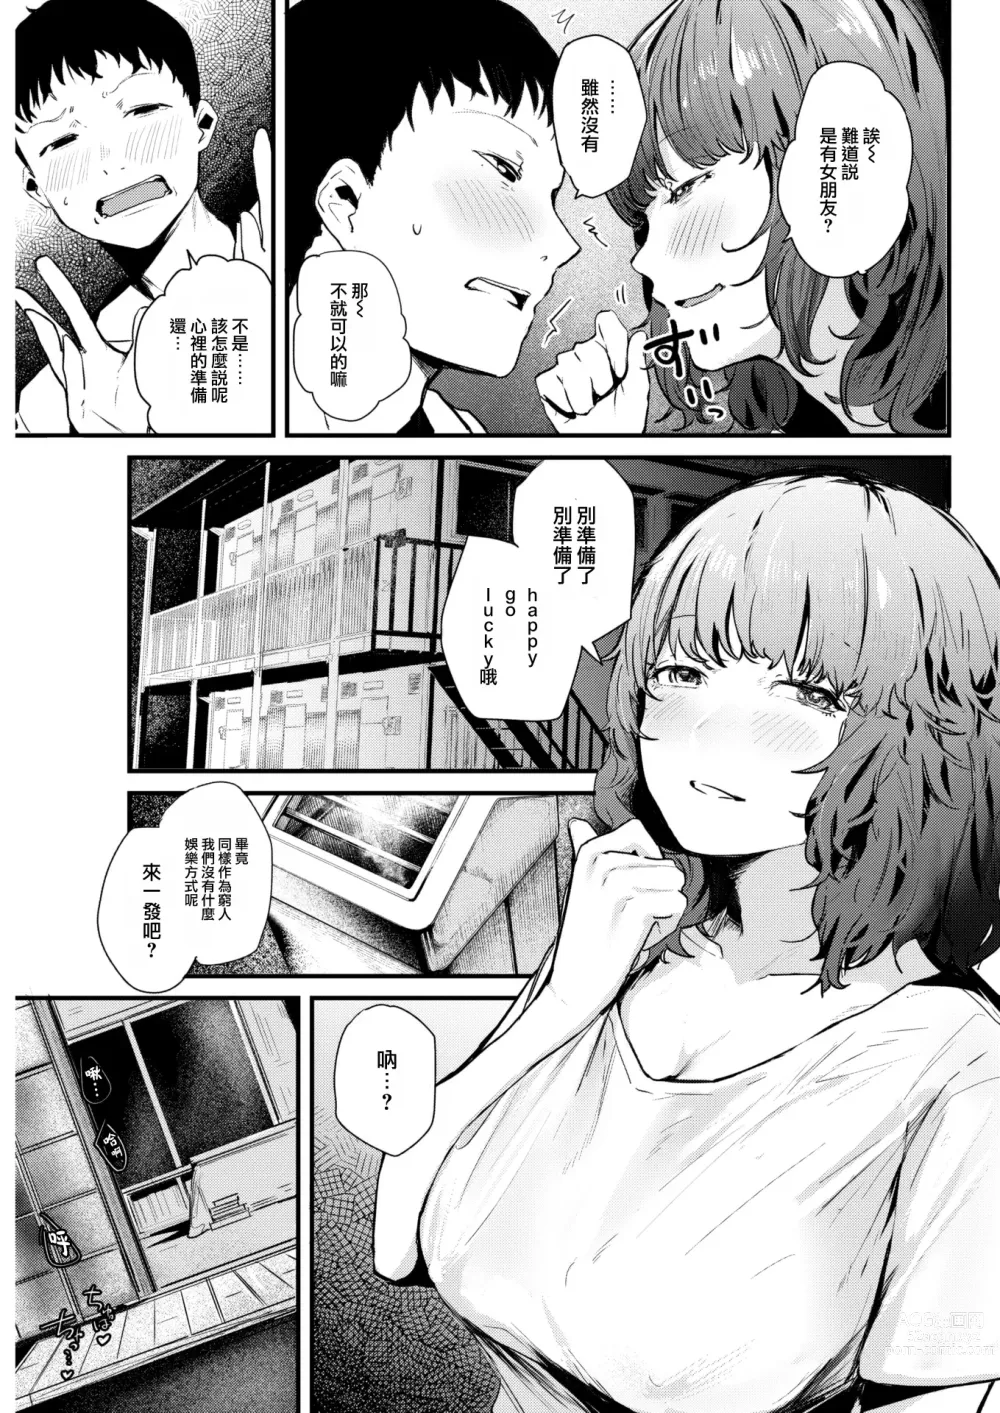 Page 6 of manga Rokujou Futari